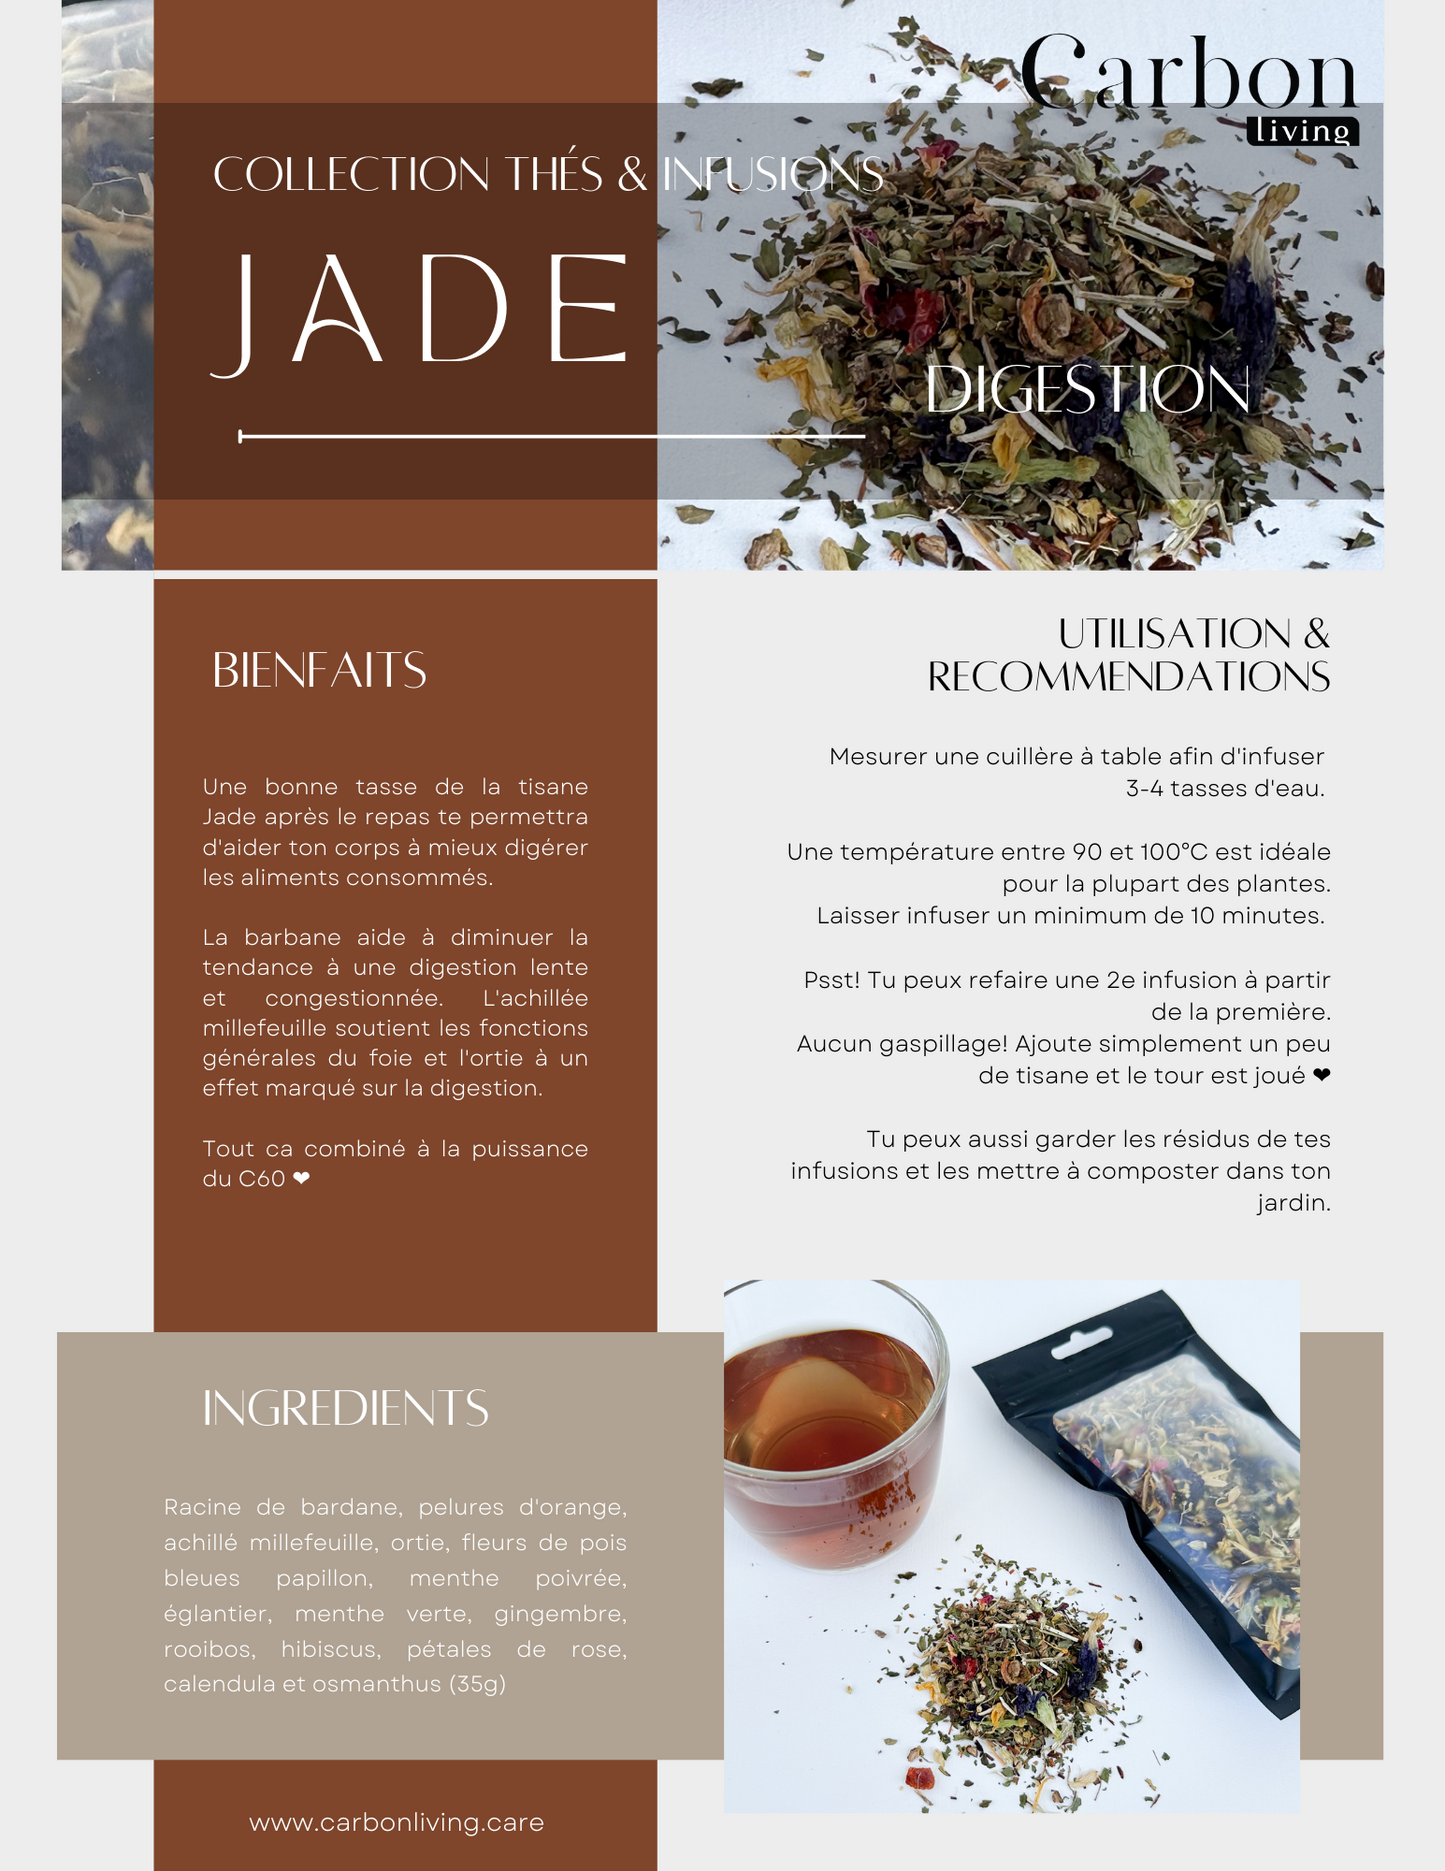 Jade - Digestion